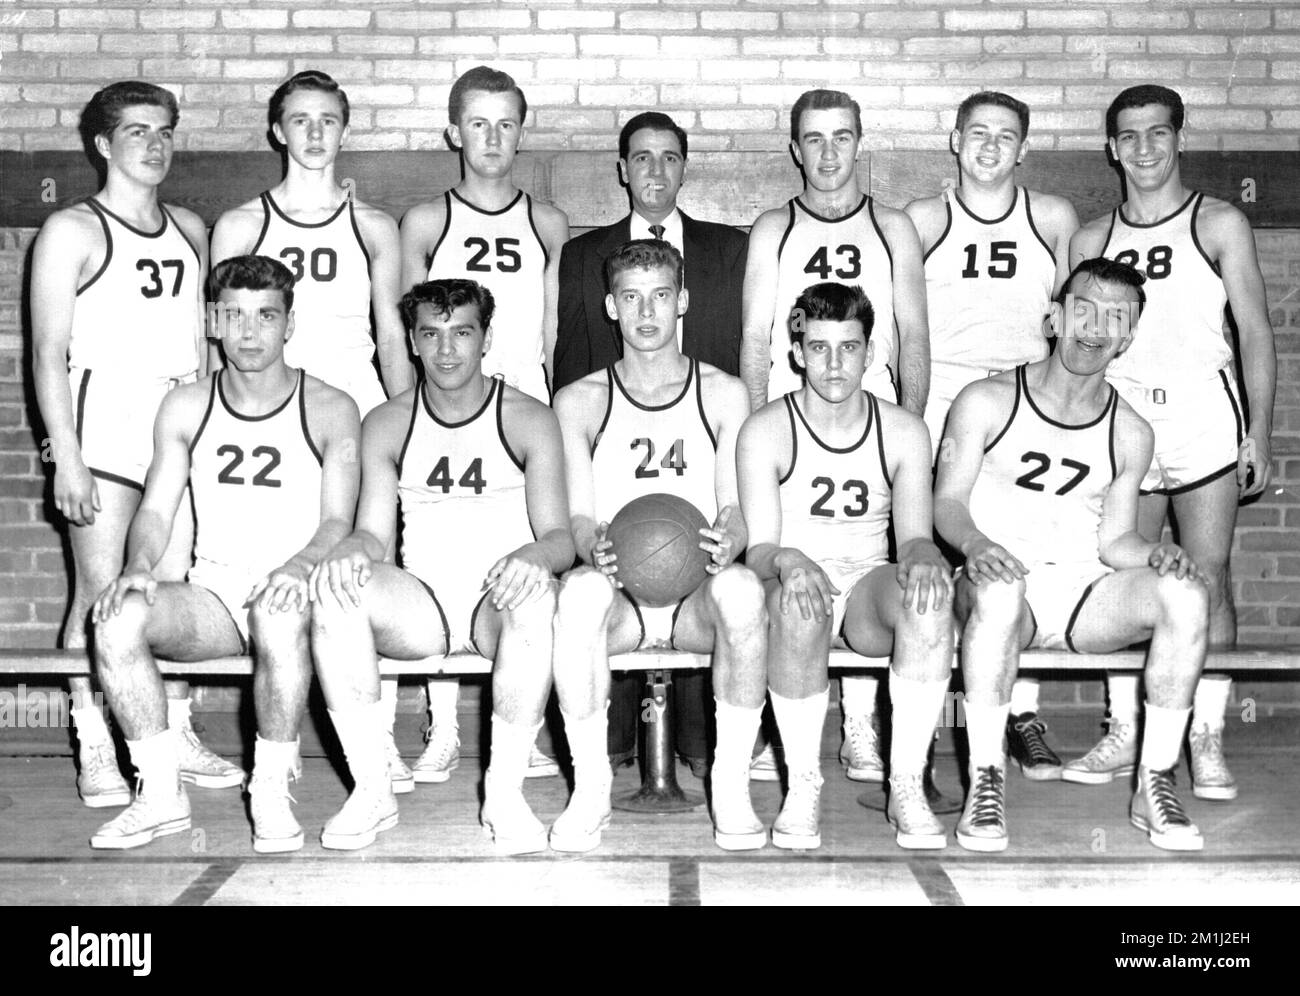 195? Lawrence High School basketball team , Basketball players, Lawrence High School Lawrence, Mass. Stock Photo